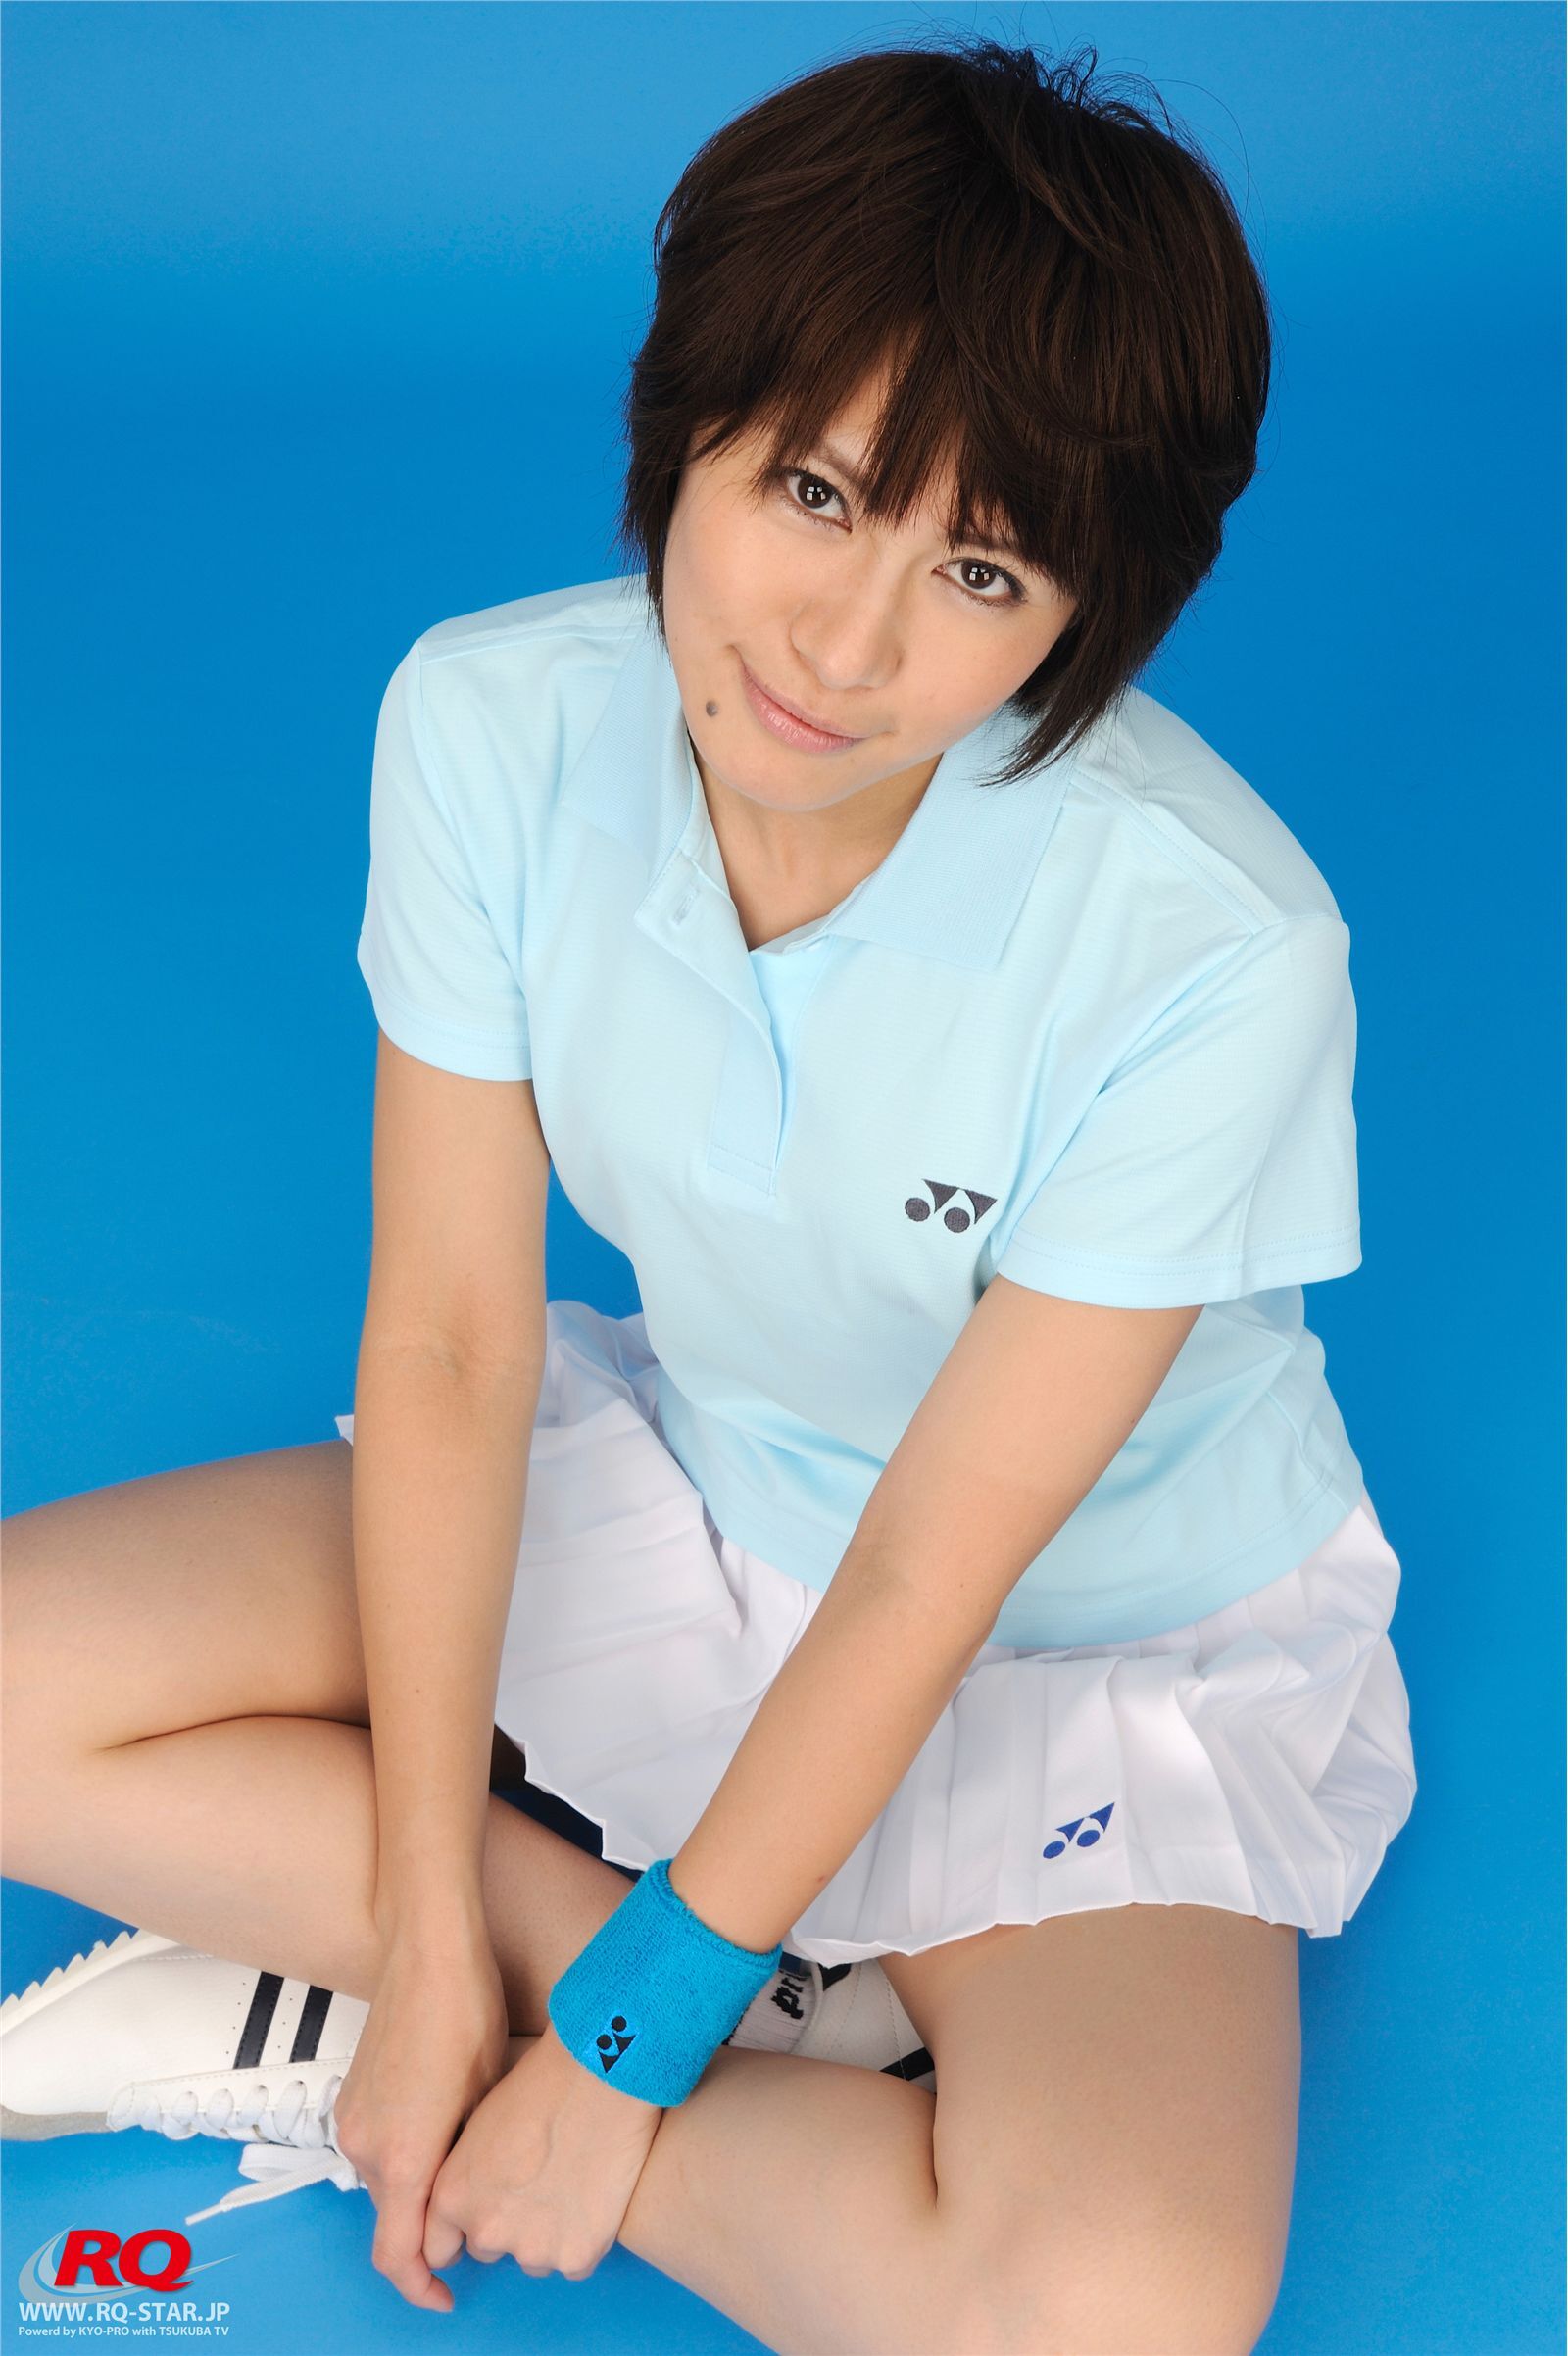 Rq-star Fujiwara Akiko badmenton wear no.00081 Japan HD uniform beauty photo